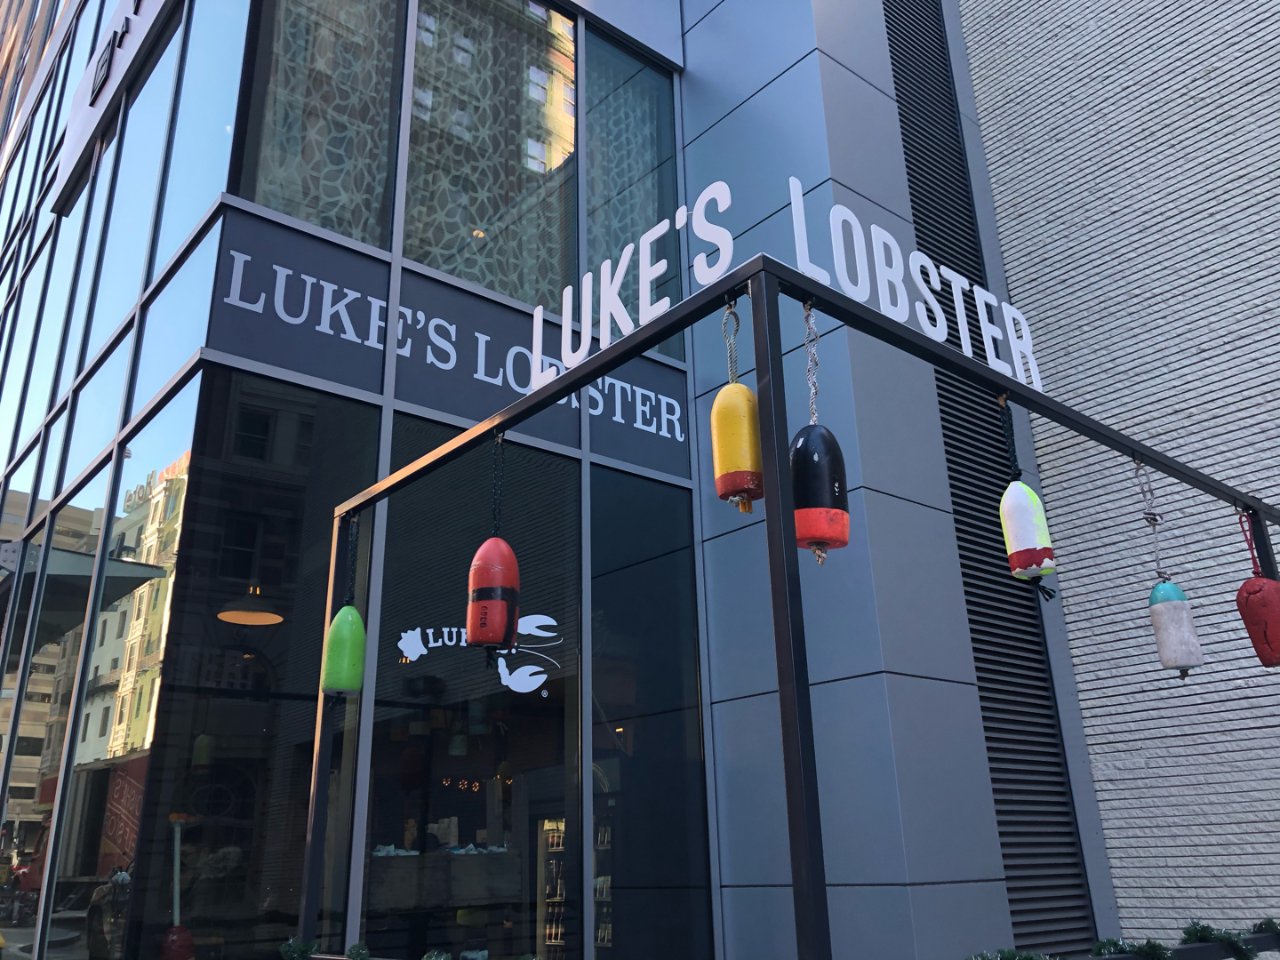 Luke’s lobster